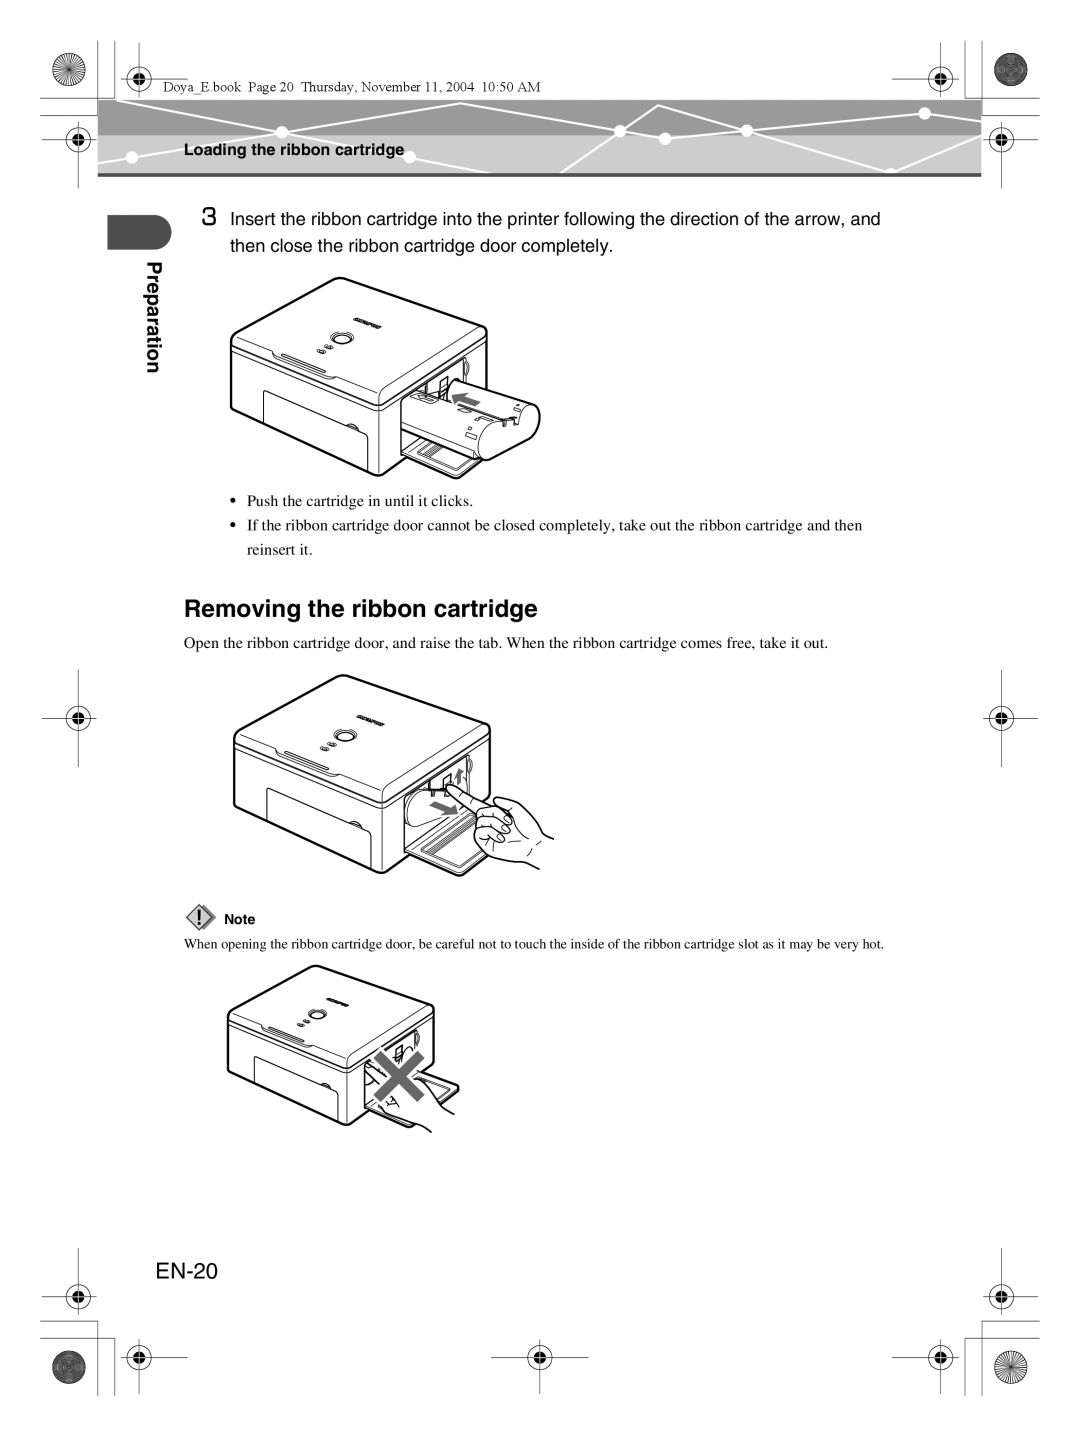 Olympus P-S100 user manual Removing the ribbon cartridge, EN-20, Preparation, Loading the ribbon cartridge 